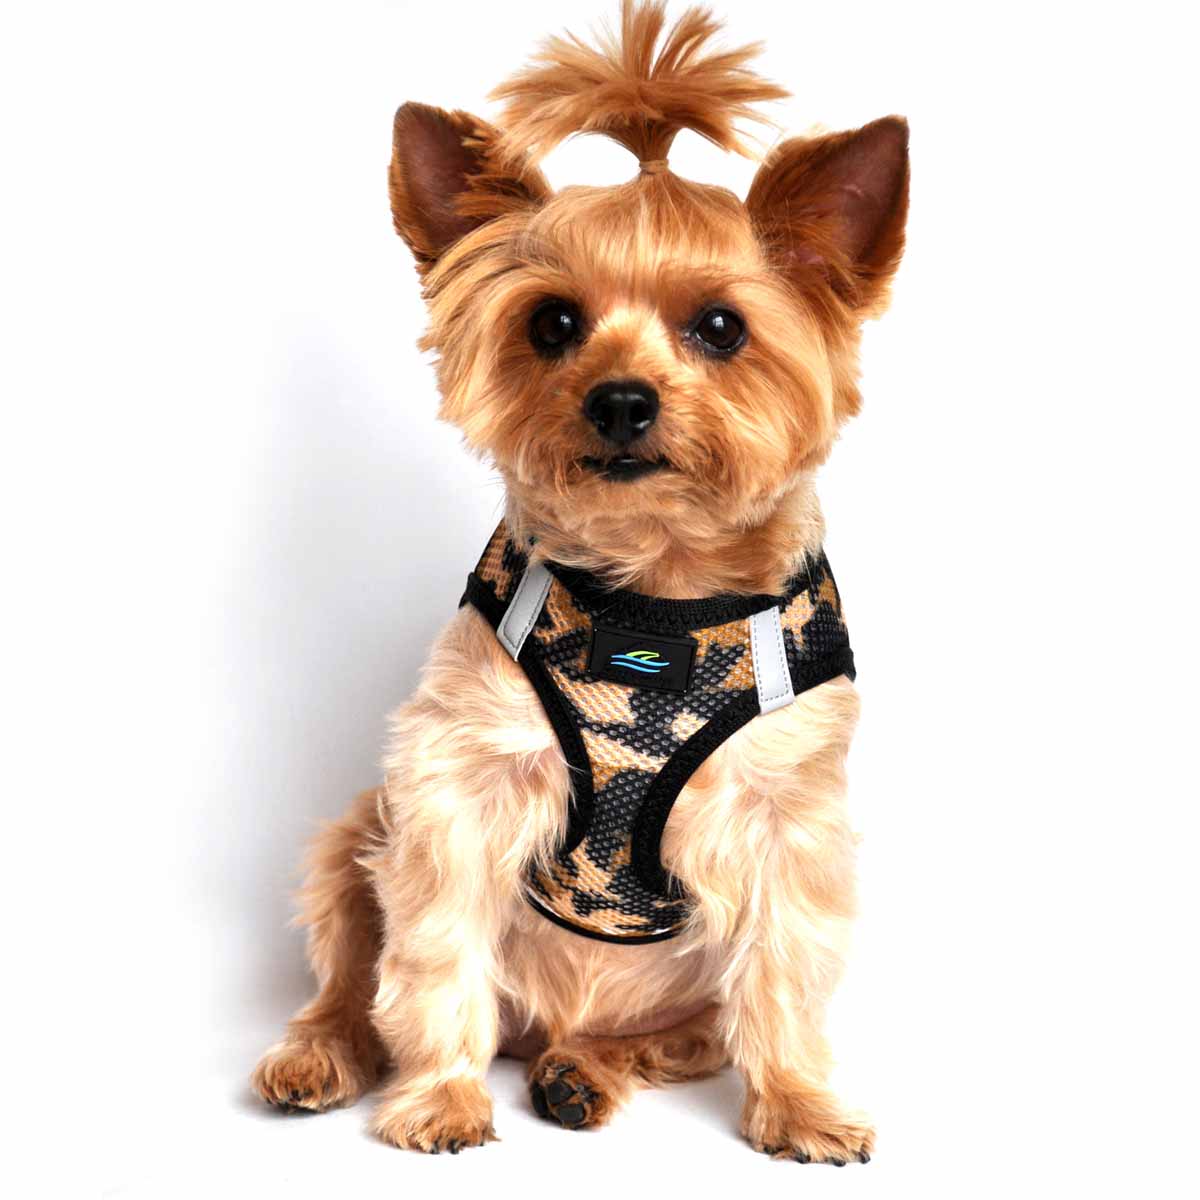 American River Camo Choke Free Dog Harness by Doggie Design - Brown